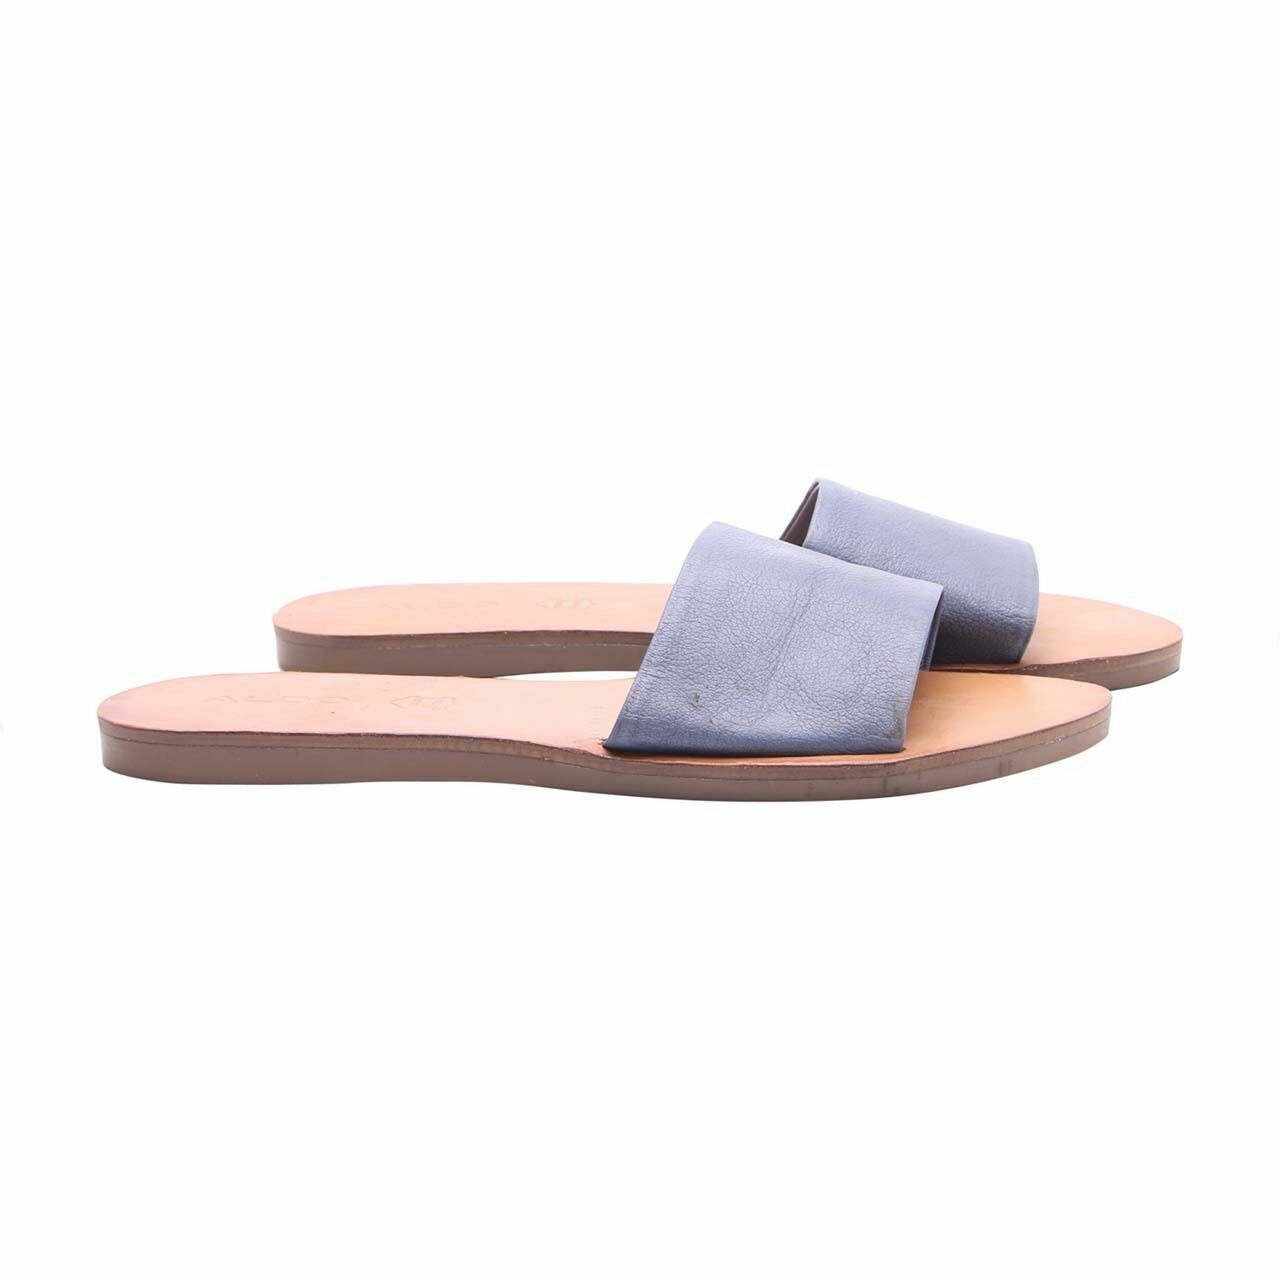 Aldo Sky Blue Slide Sandals